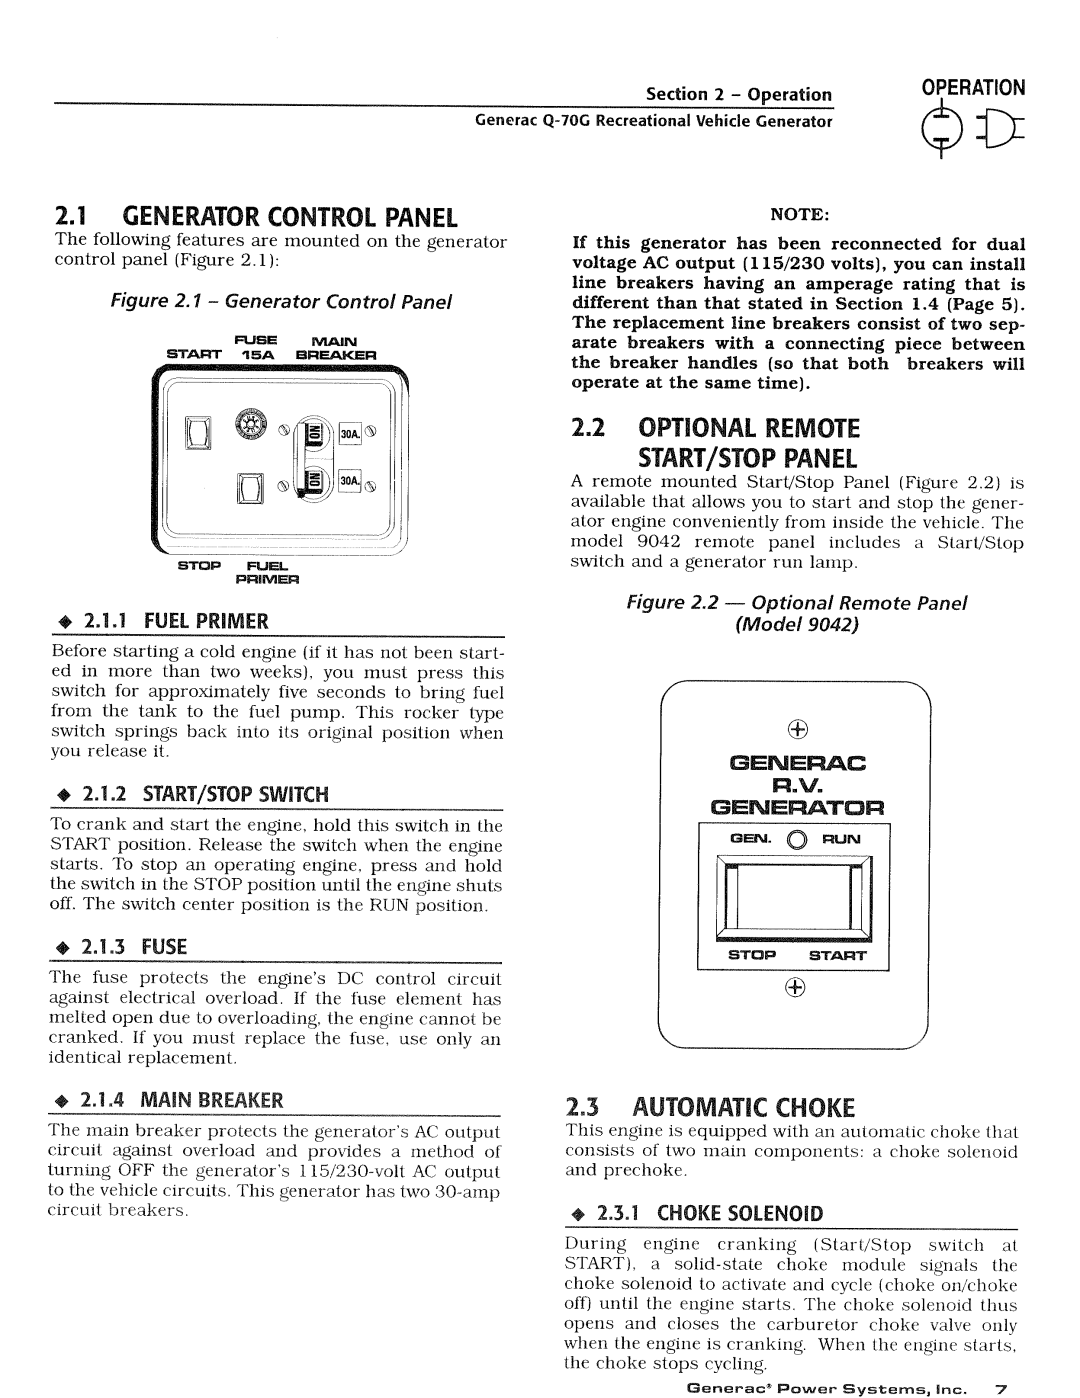 Generac Power Systems 0784-1 manual 